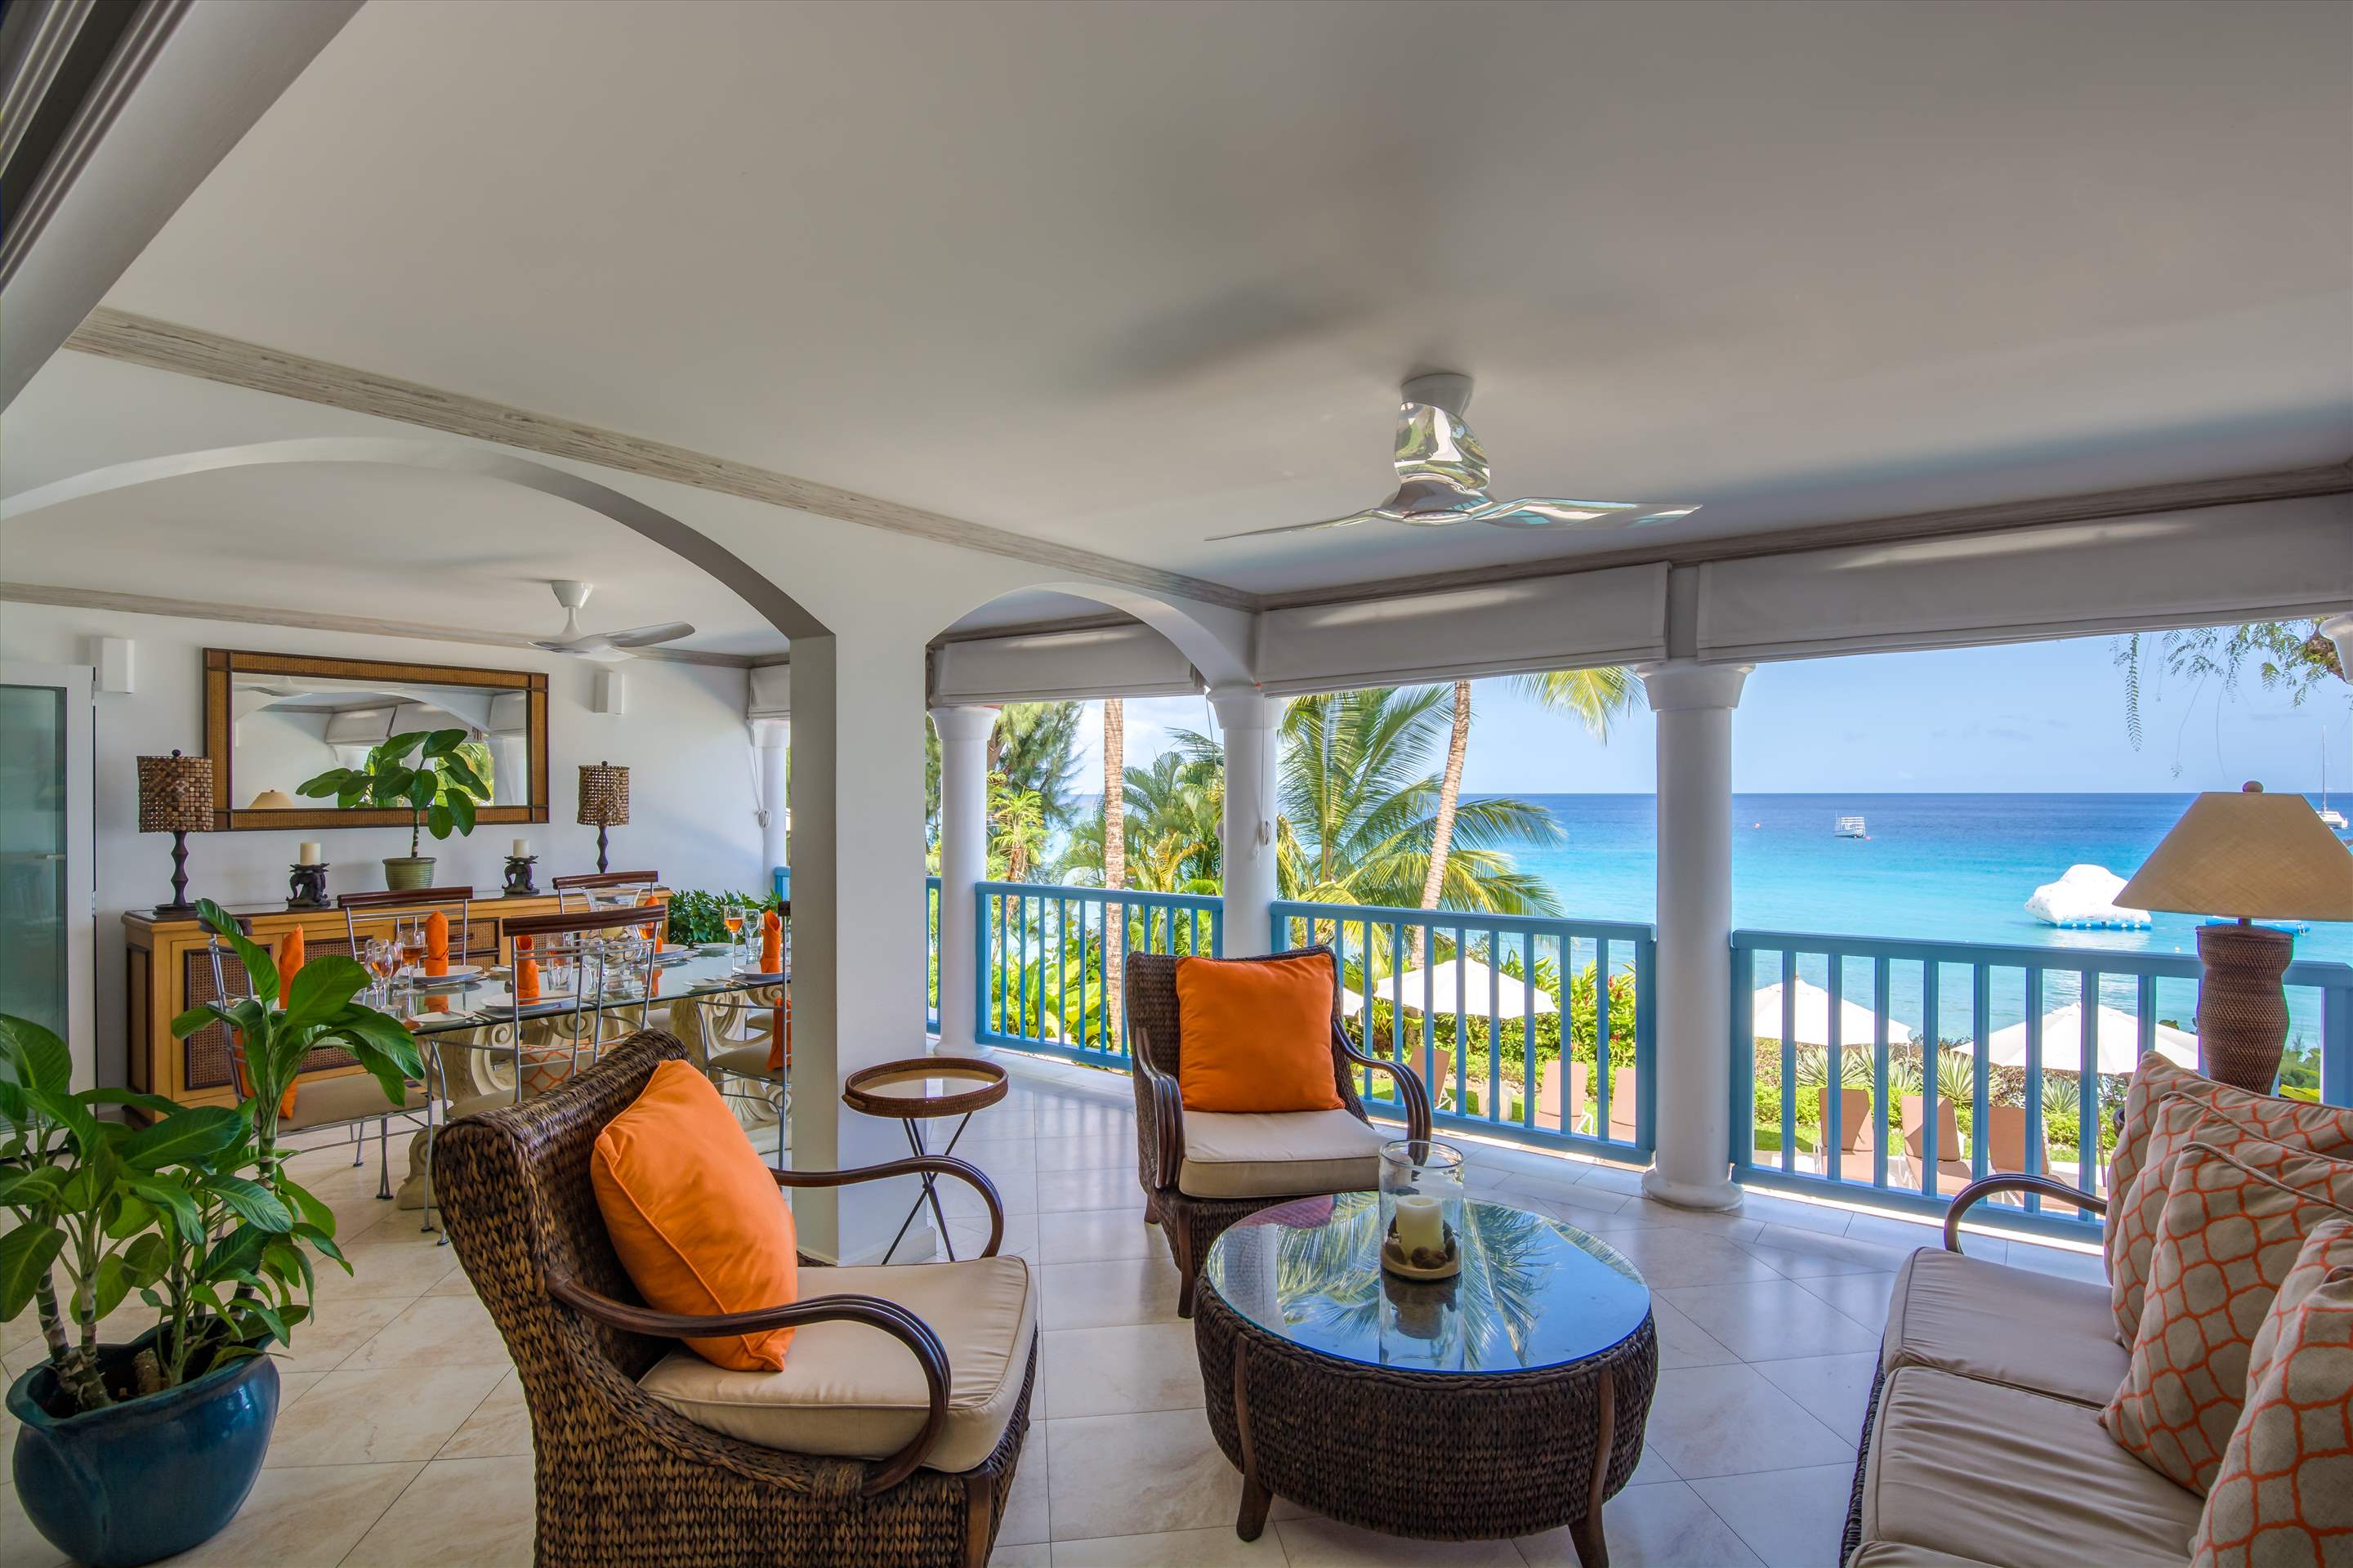 Villas on the Beach 201 , 3 bedroom, 3 bedroom apartment in St. James & West Coast, Barbados Photo #3